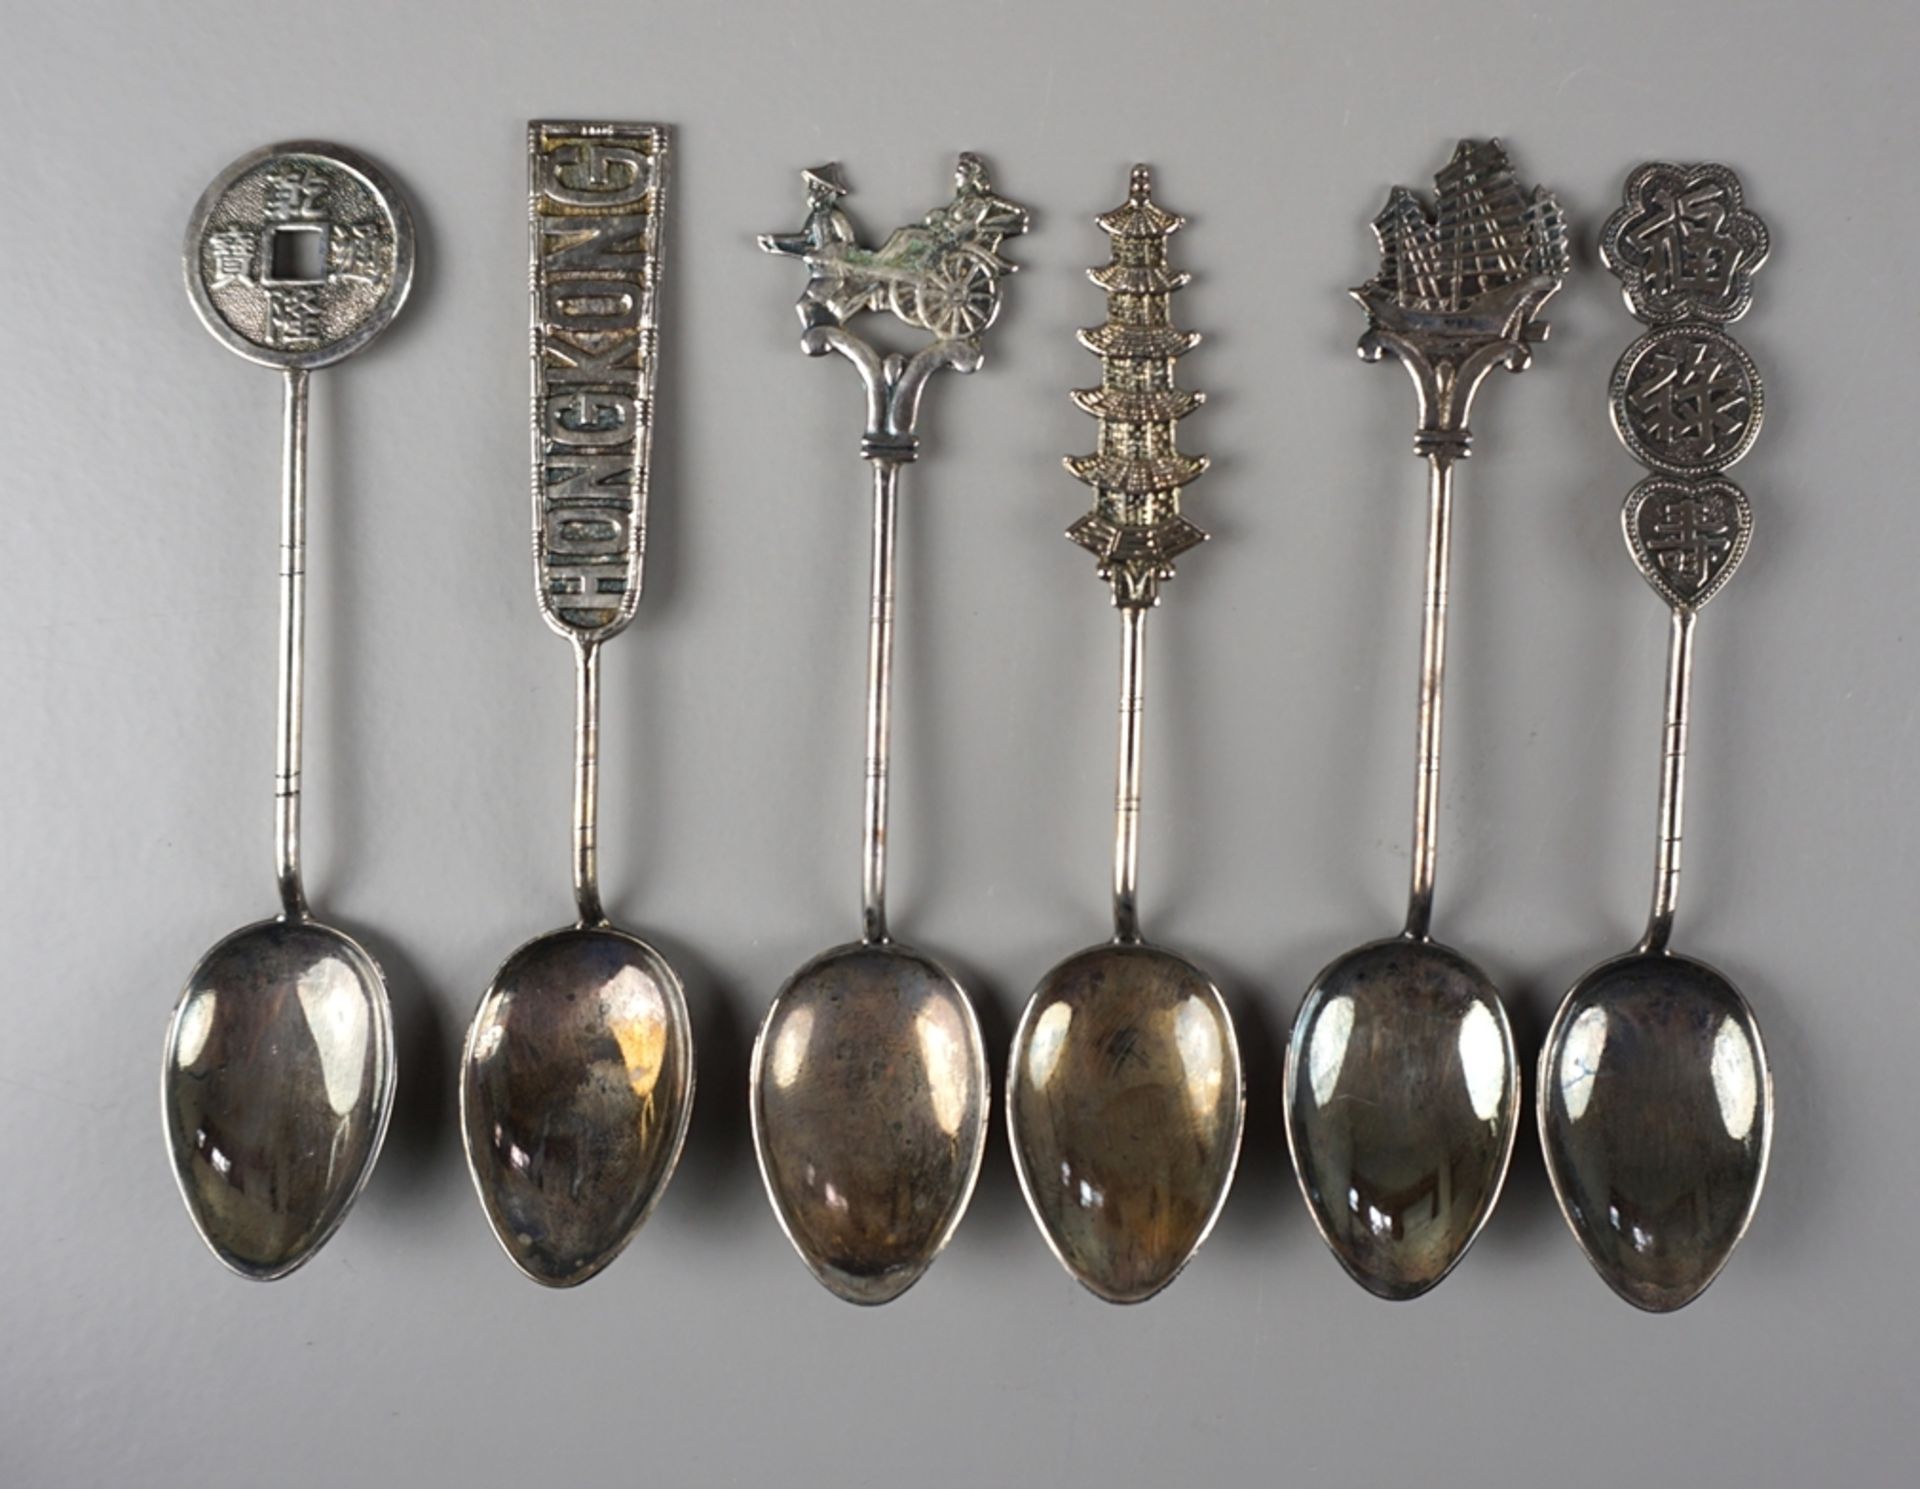 6 souvenir spoons, silver plated, Hong Kong